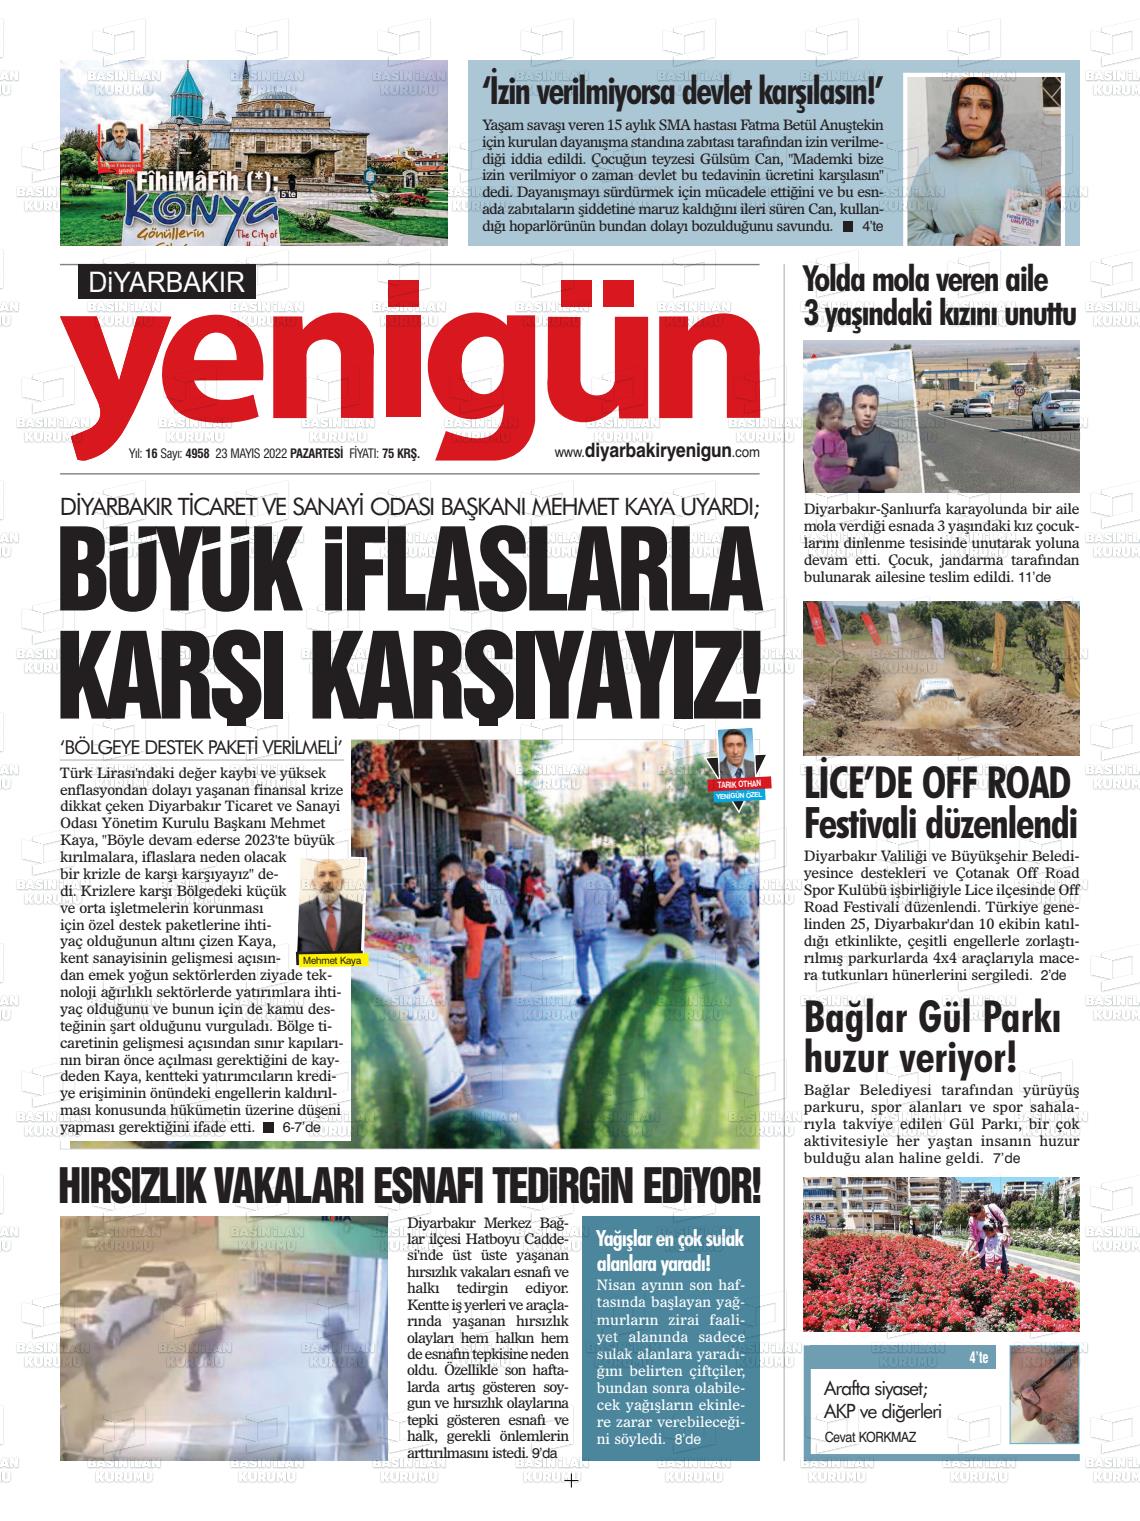 23 Mayıs 2022 Diyarbakır Yenigün Gazete Manşeti